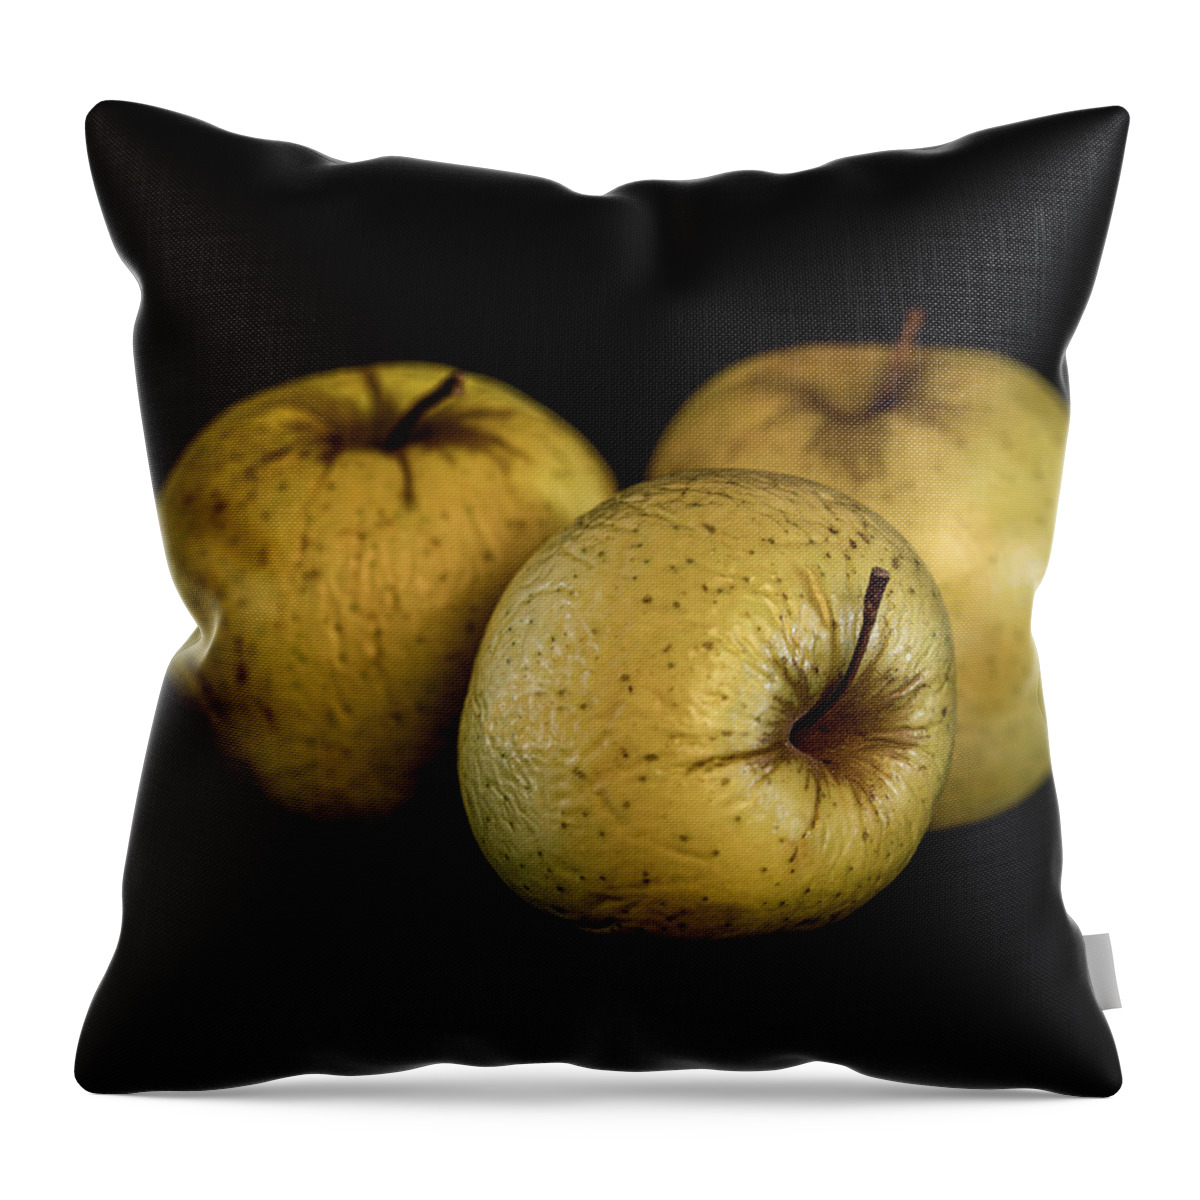 Myeress Throw Pillow featuring the photograph Apples Past Prime by Joe Myeress